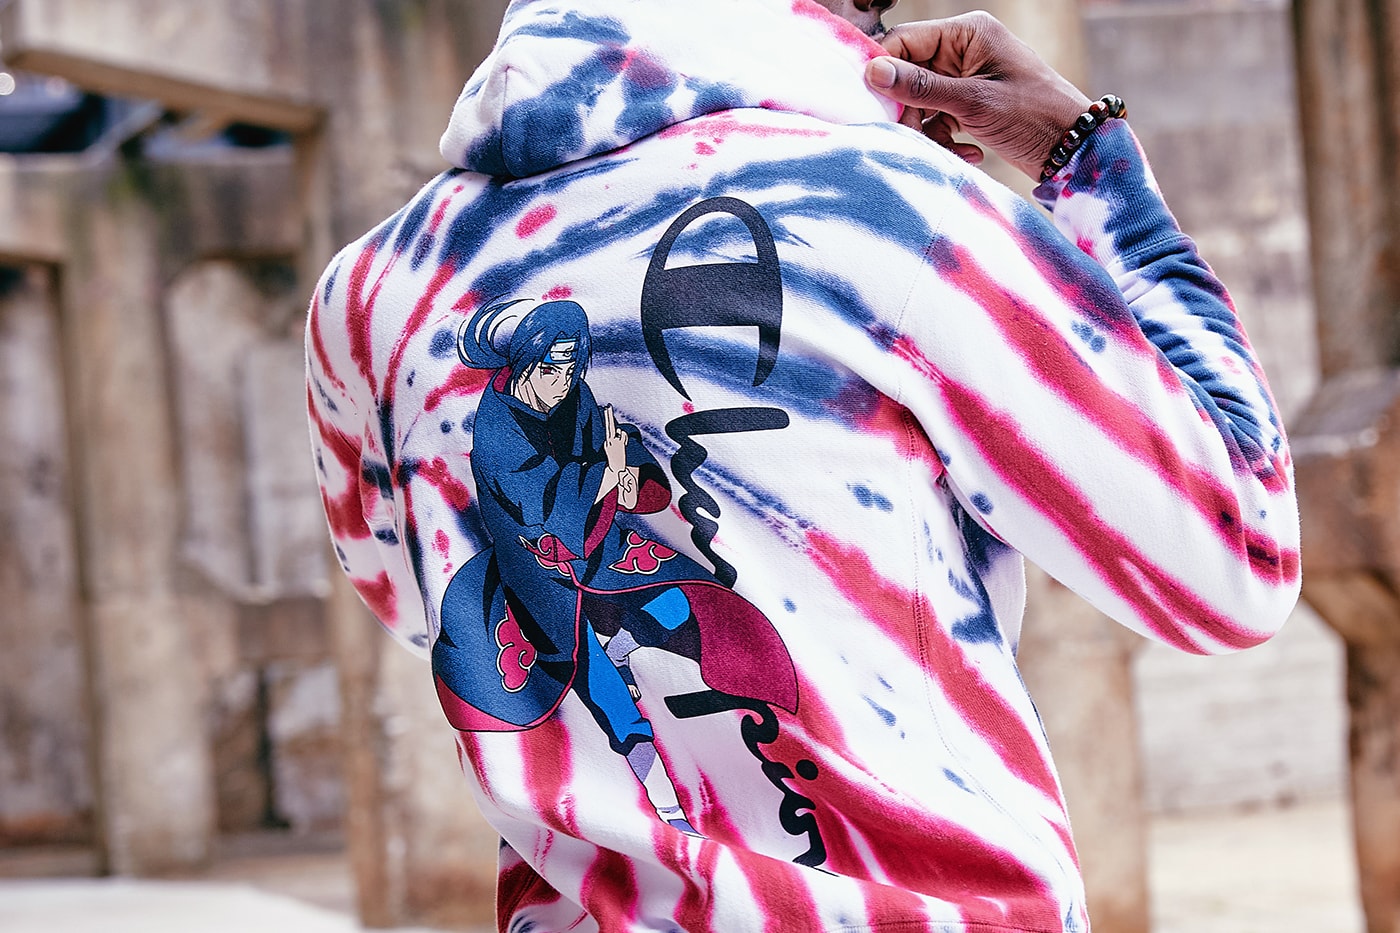 Naruto Shippuden Champion anime hoodie t-shirt gaara kakashi sakura sasuke ichigo reverse weave heritage release drop info date available online 